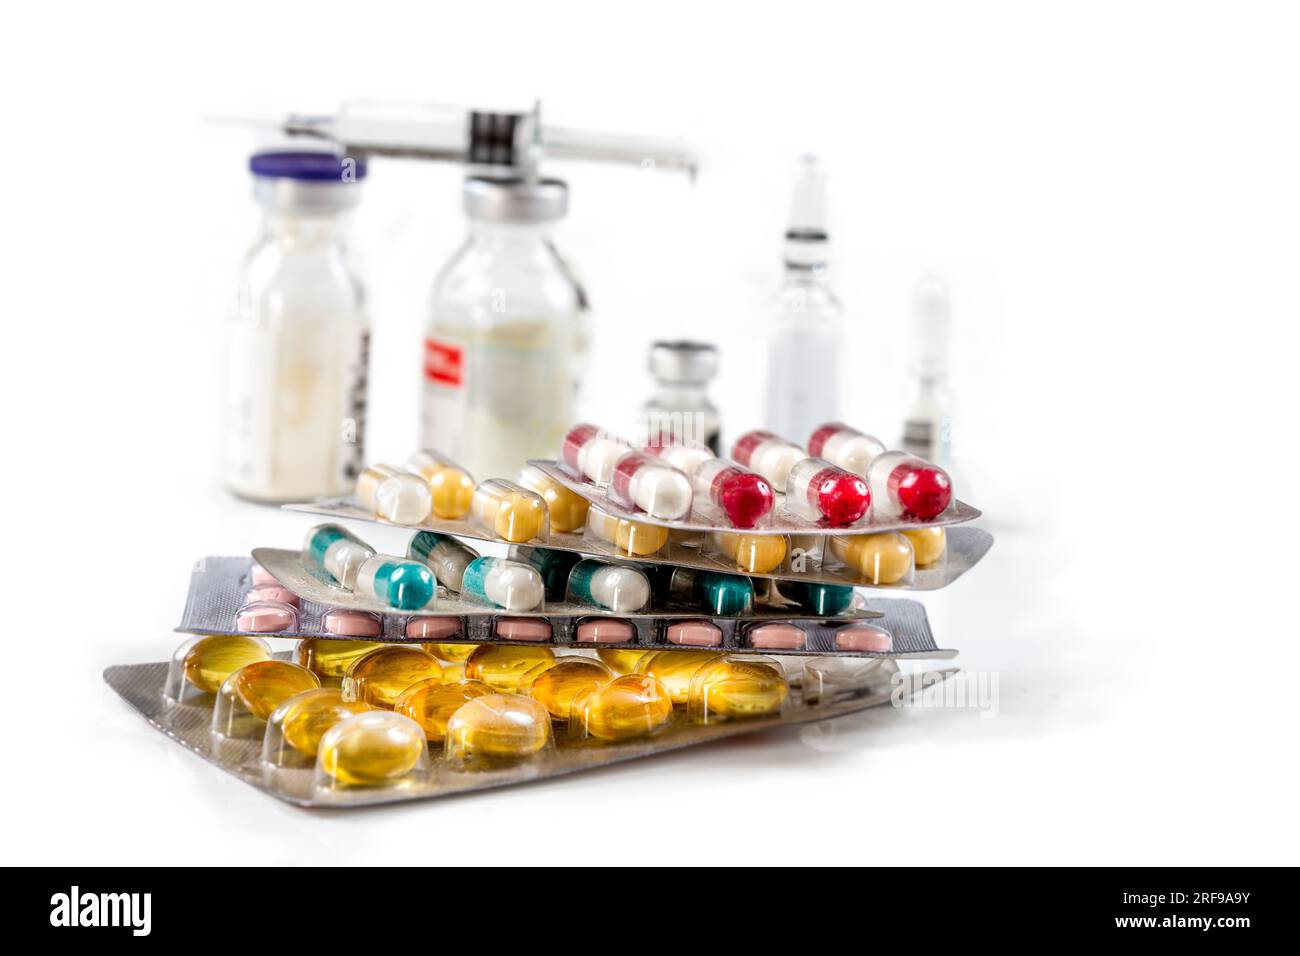 Assortiment de pilules, comprimés et capsules, seringue avec vaccin. Banque D'Images